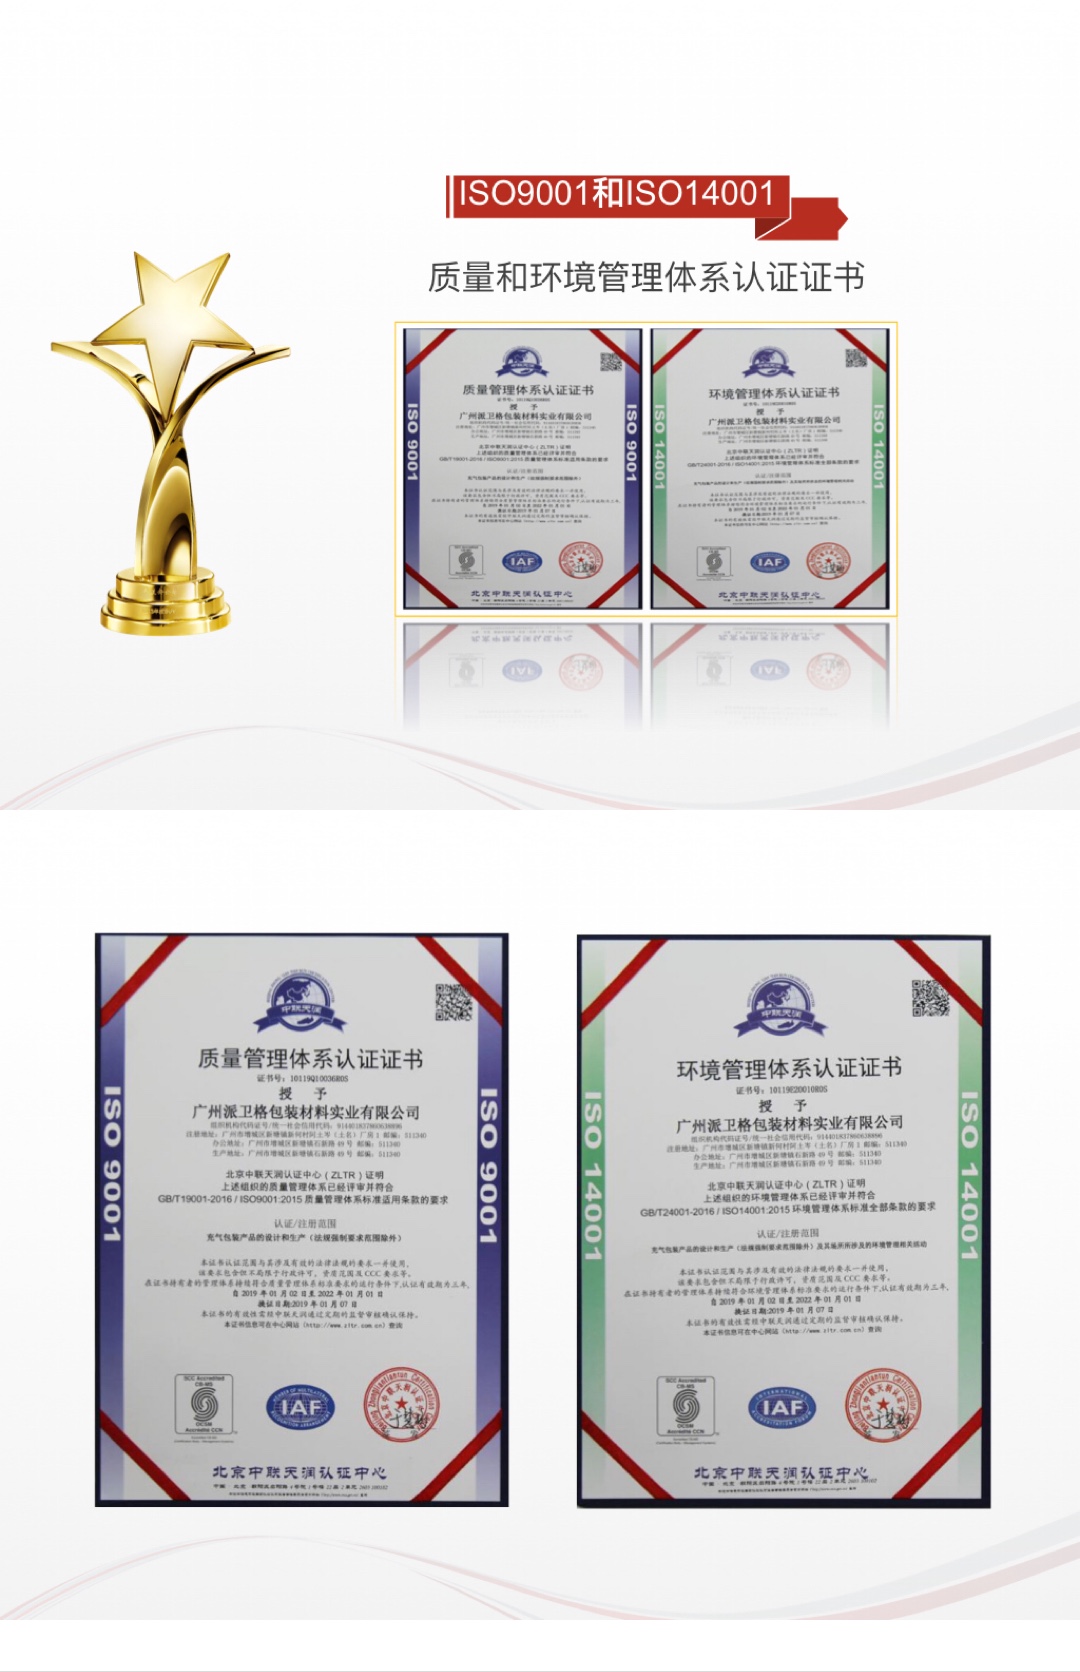 派卫格顺利通过ISO9001和ISO14001双体系认证 